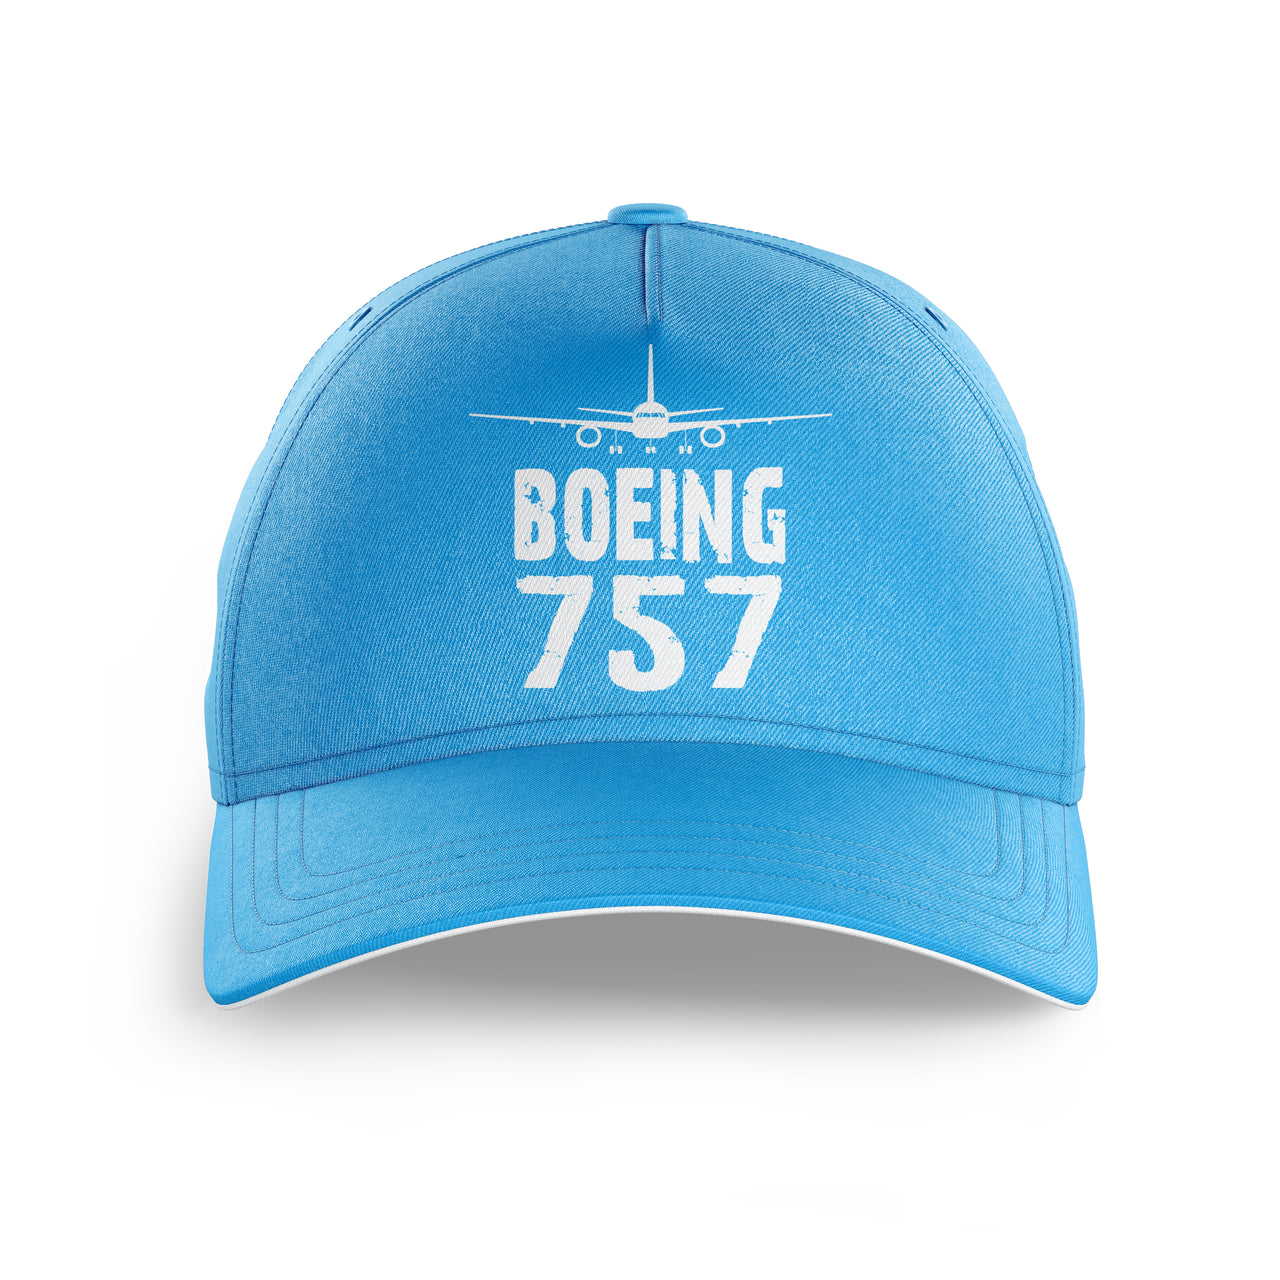 Boeing 757 & Plane Printed Hats